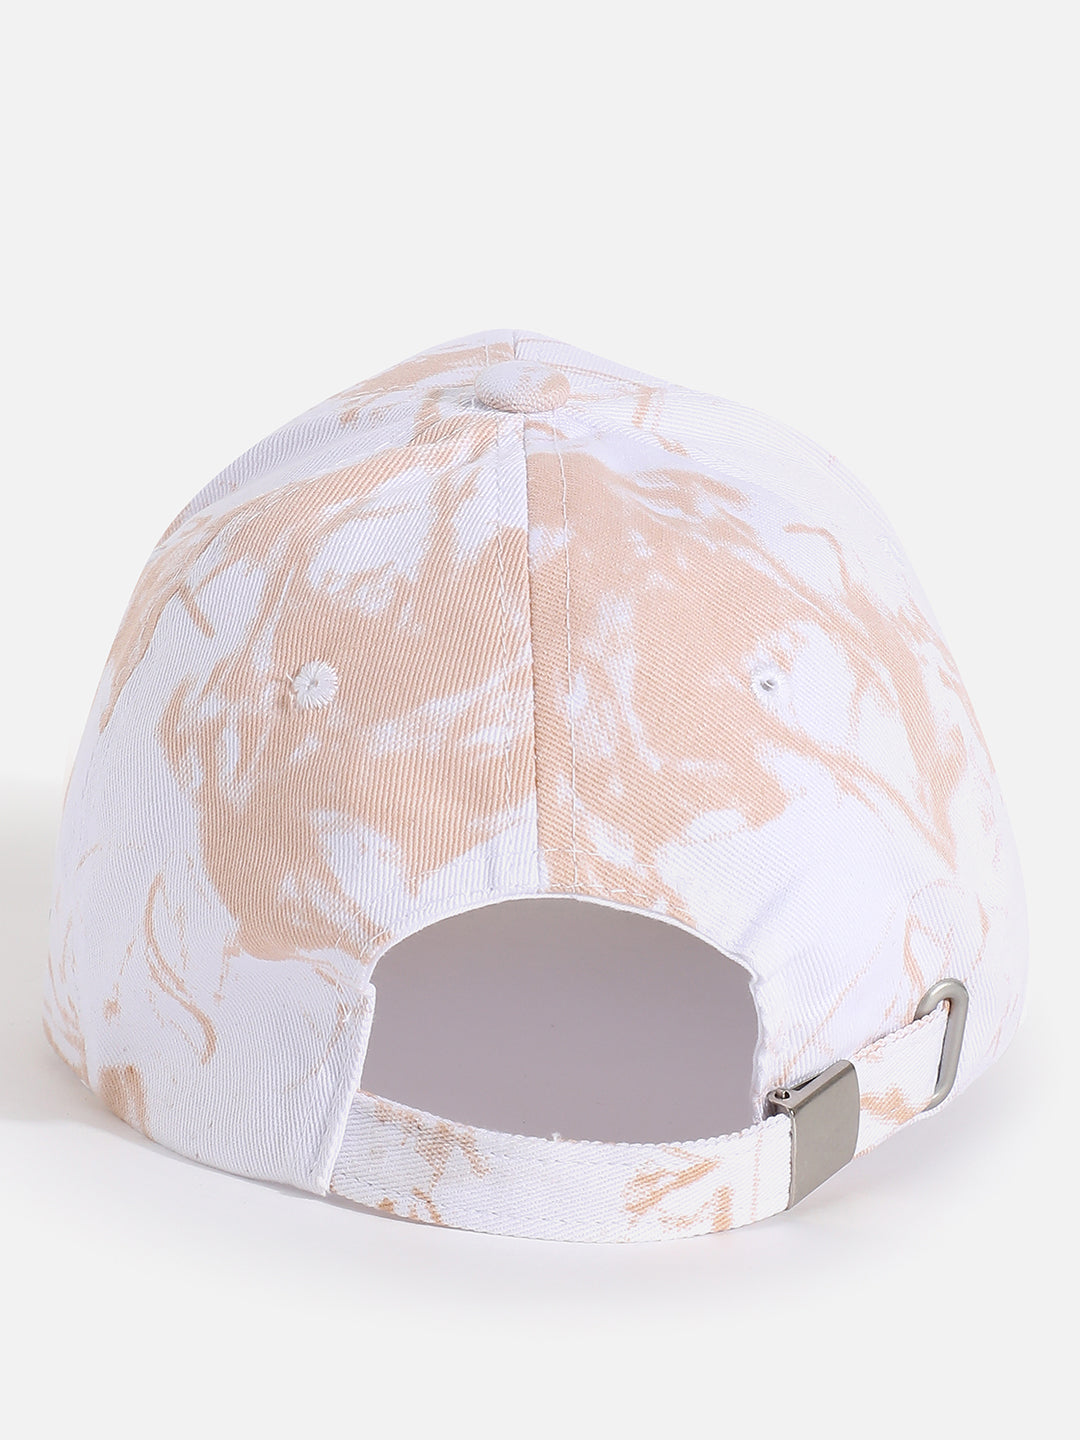 White & Beige Tie-Dye Textured Baseball Cap